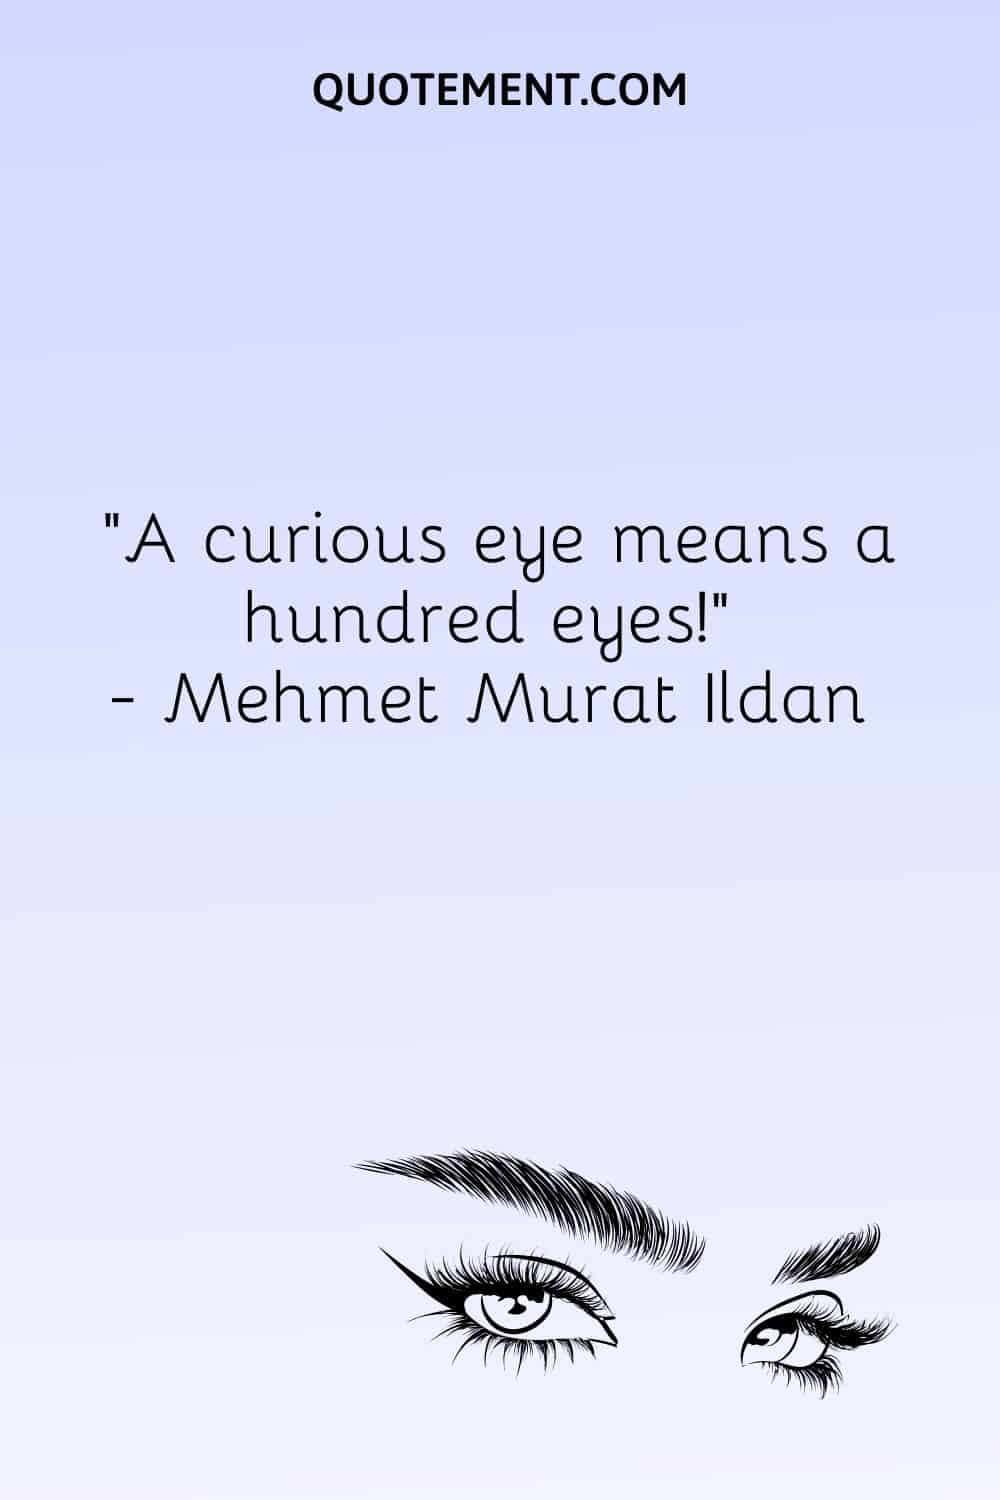 A curious eye means a hundred eyes